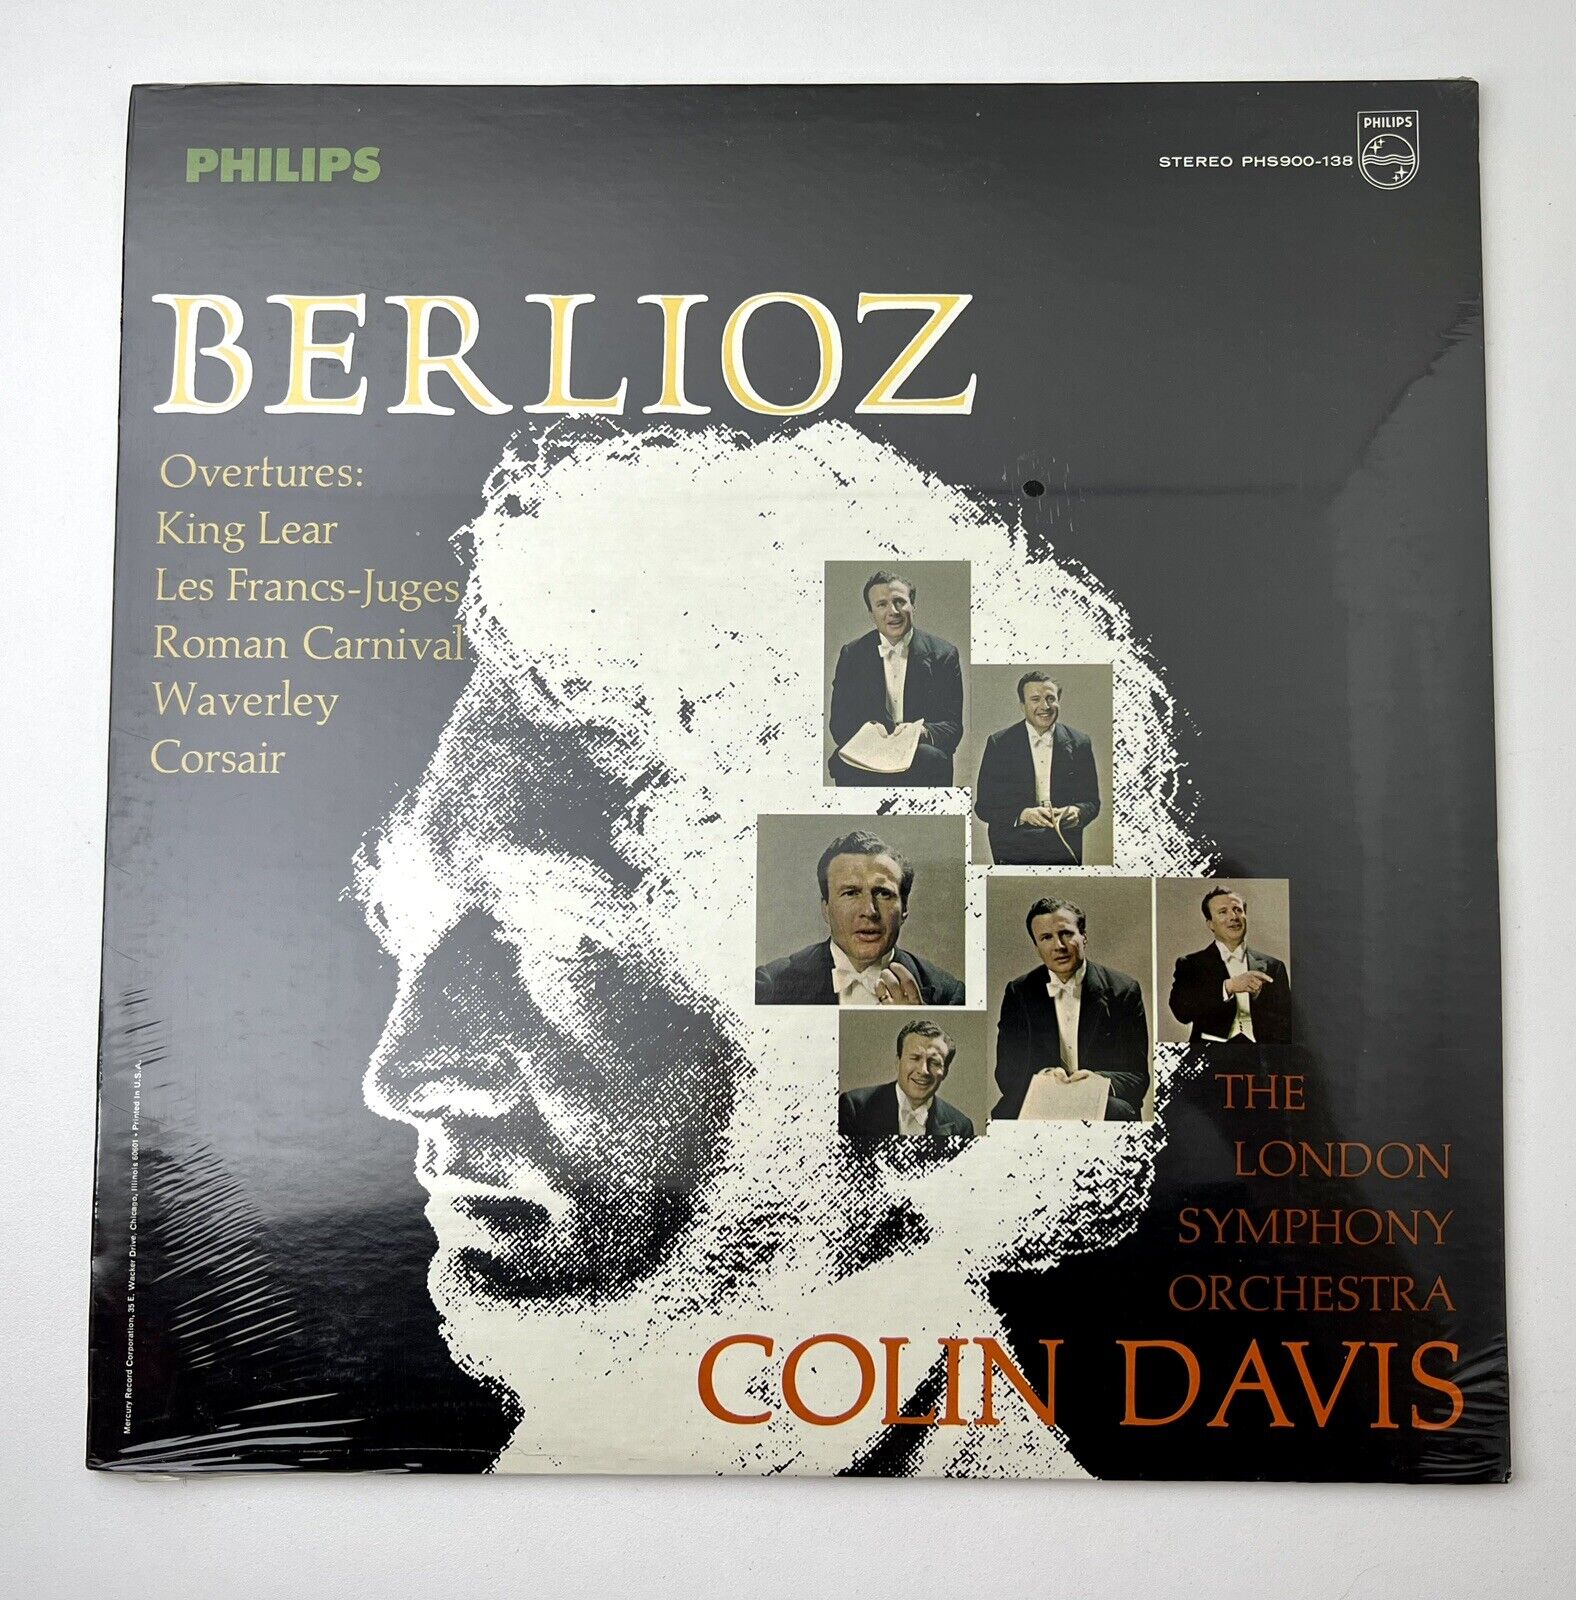 Hector Berlioz - Berlioz Overtures: PHS900-138 LP - *Factory Sealed*